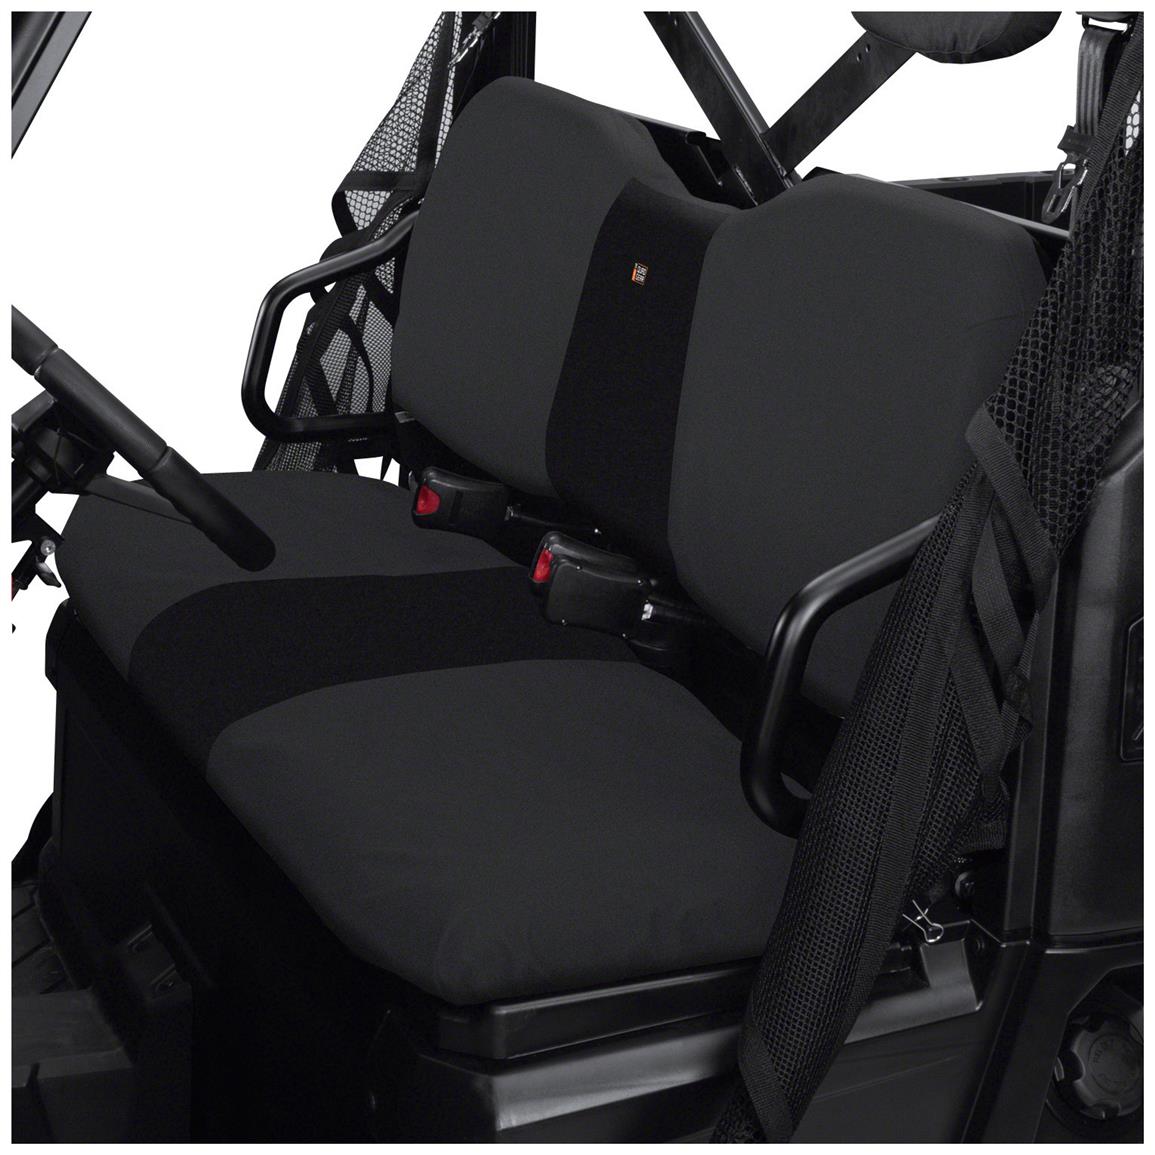 Quad Gear UTV Bench Seat Cover, Polaris Ranger Full-size 800 and 900 Series, Black